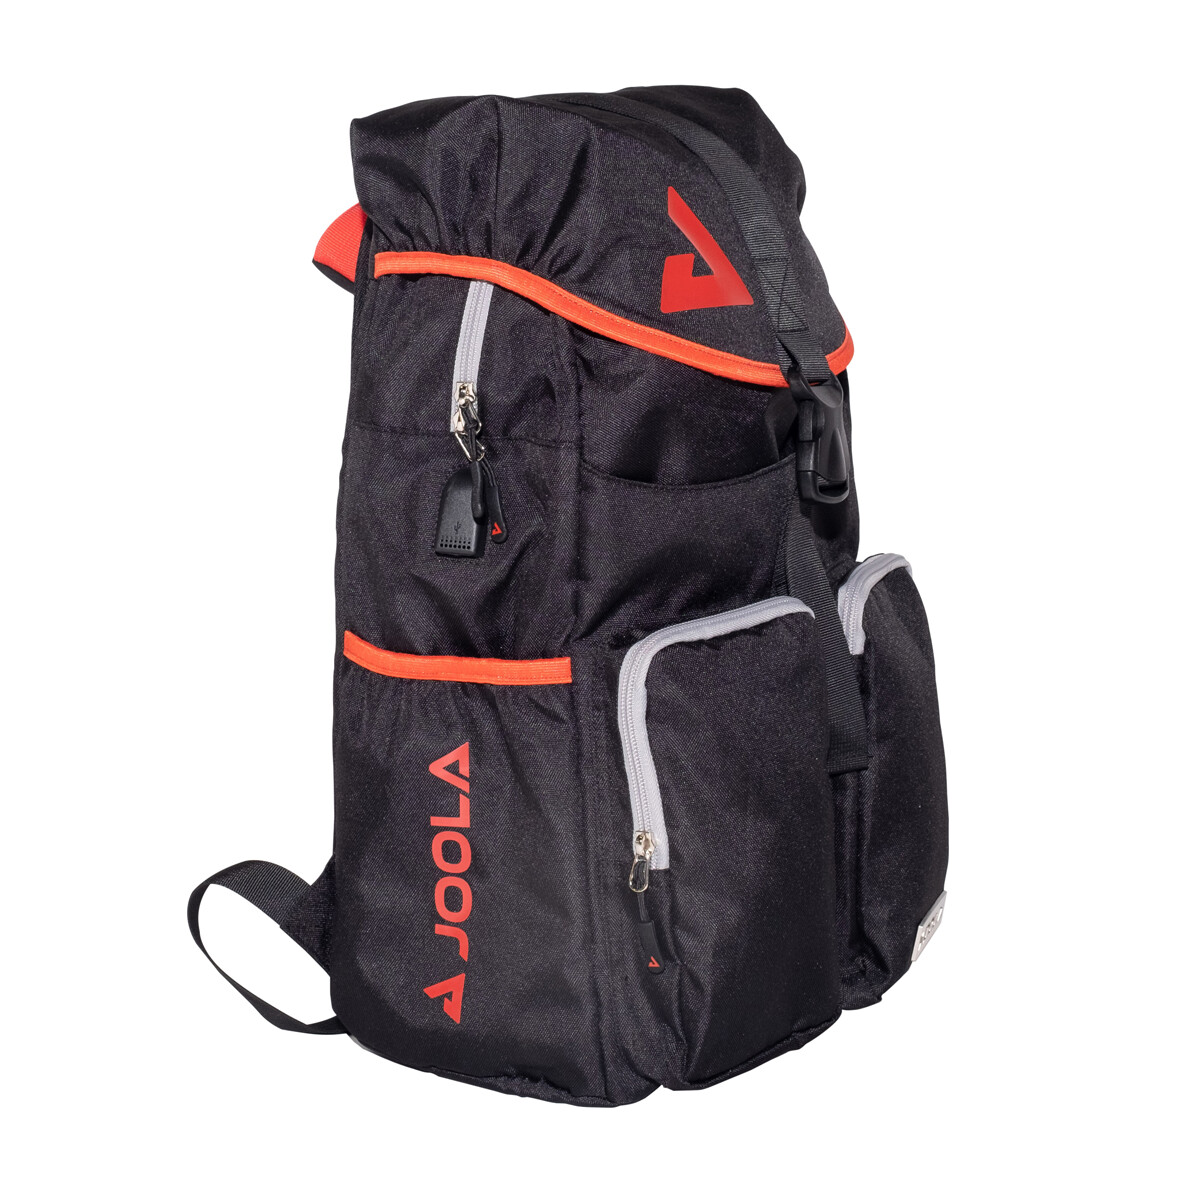 JOOLA Vision Backpack